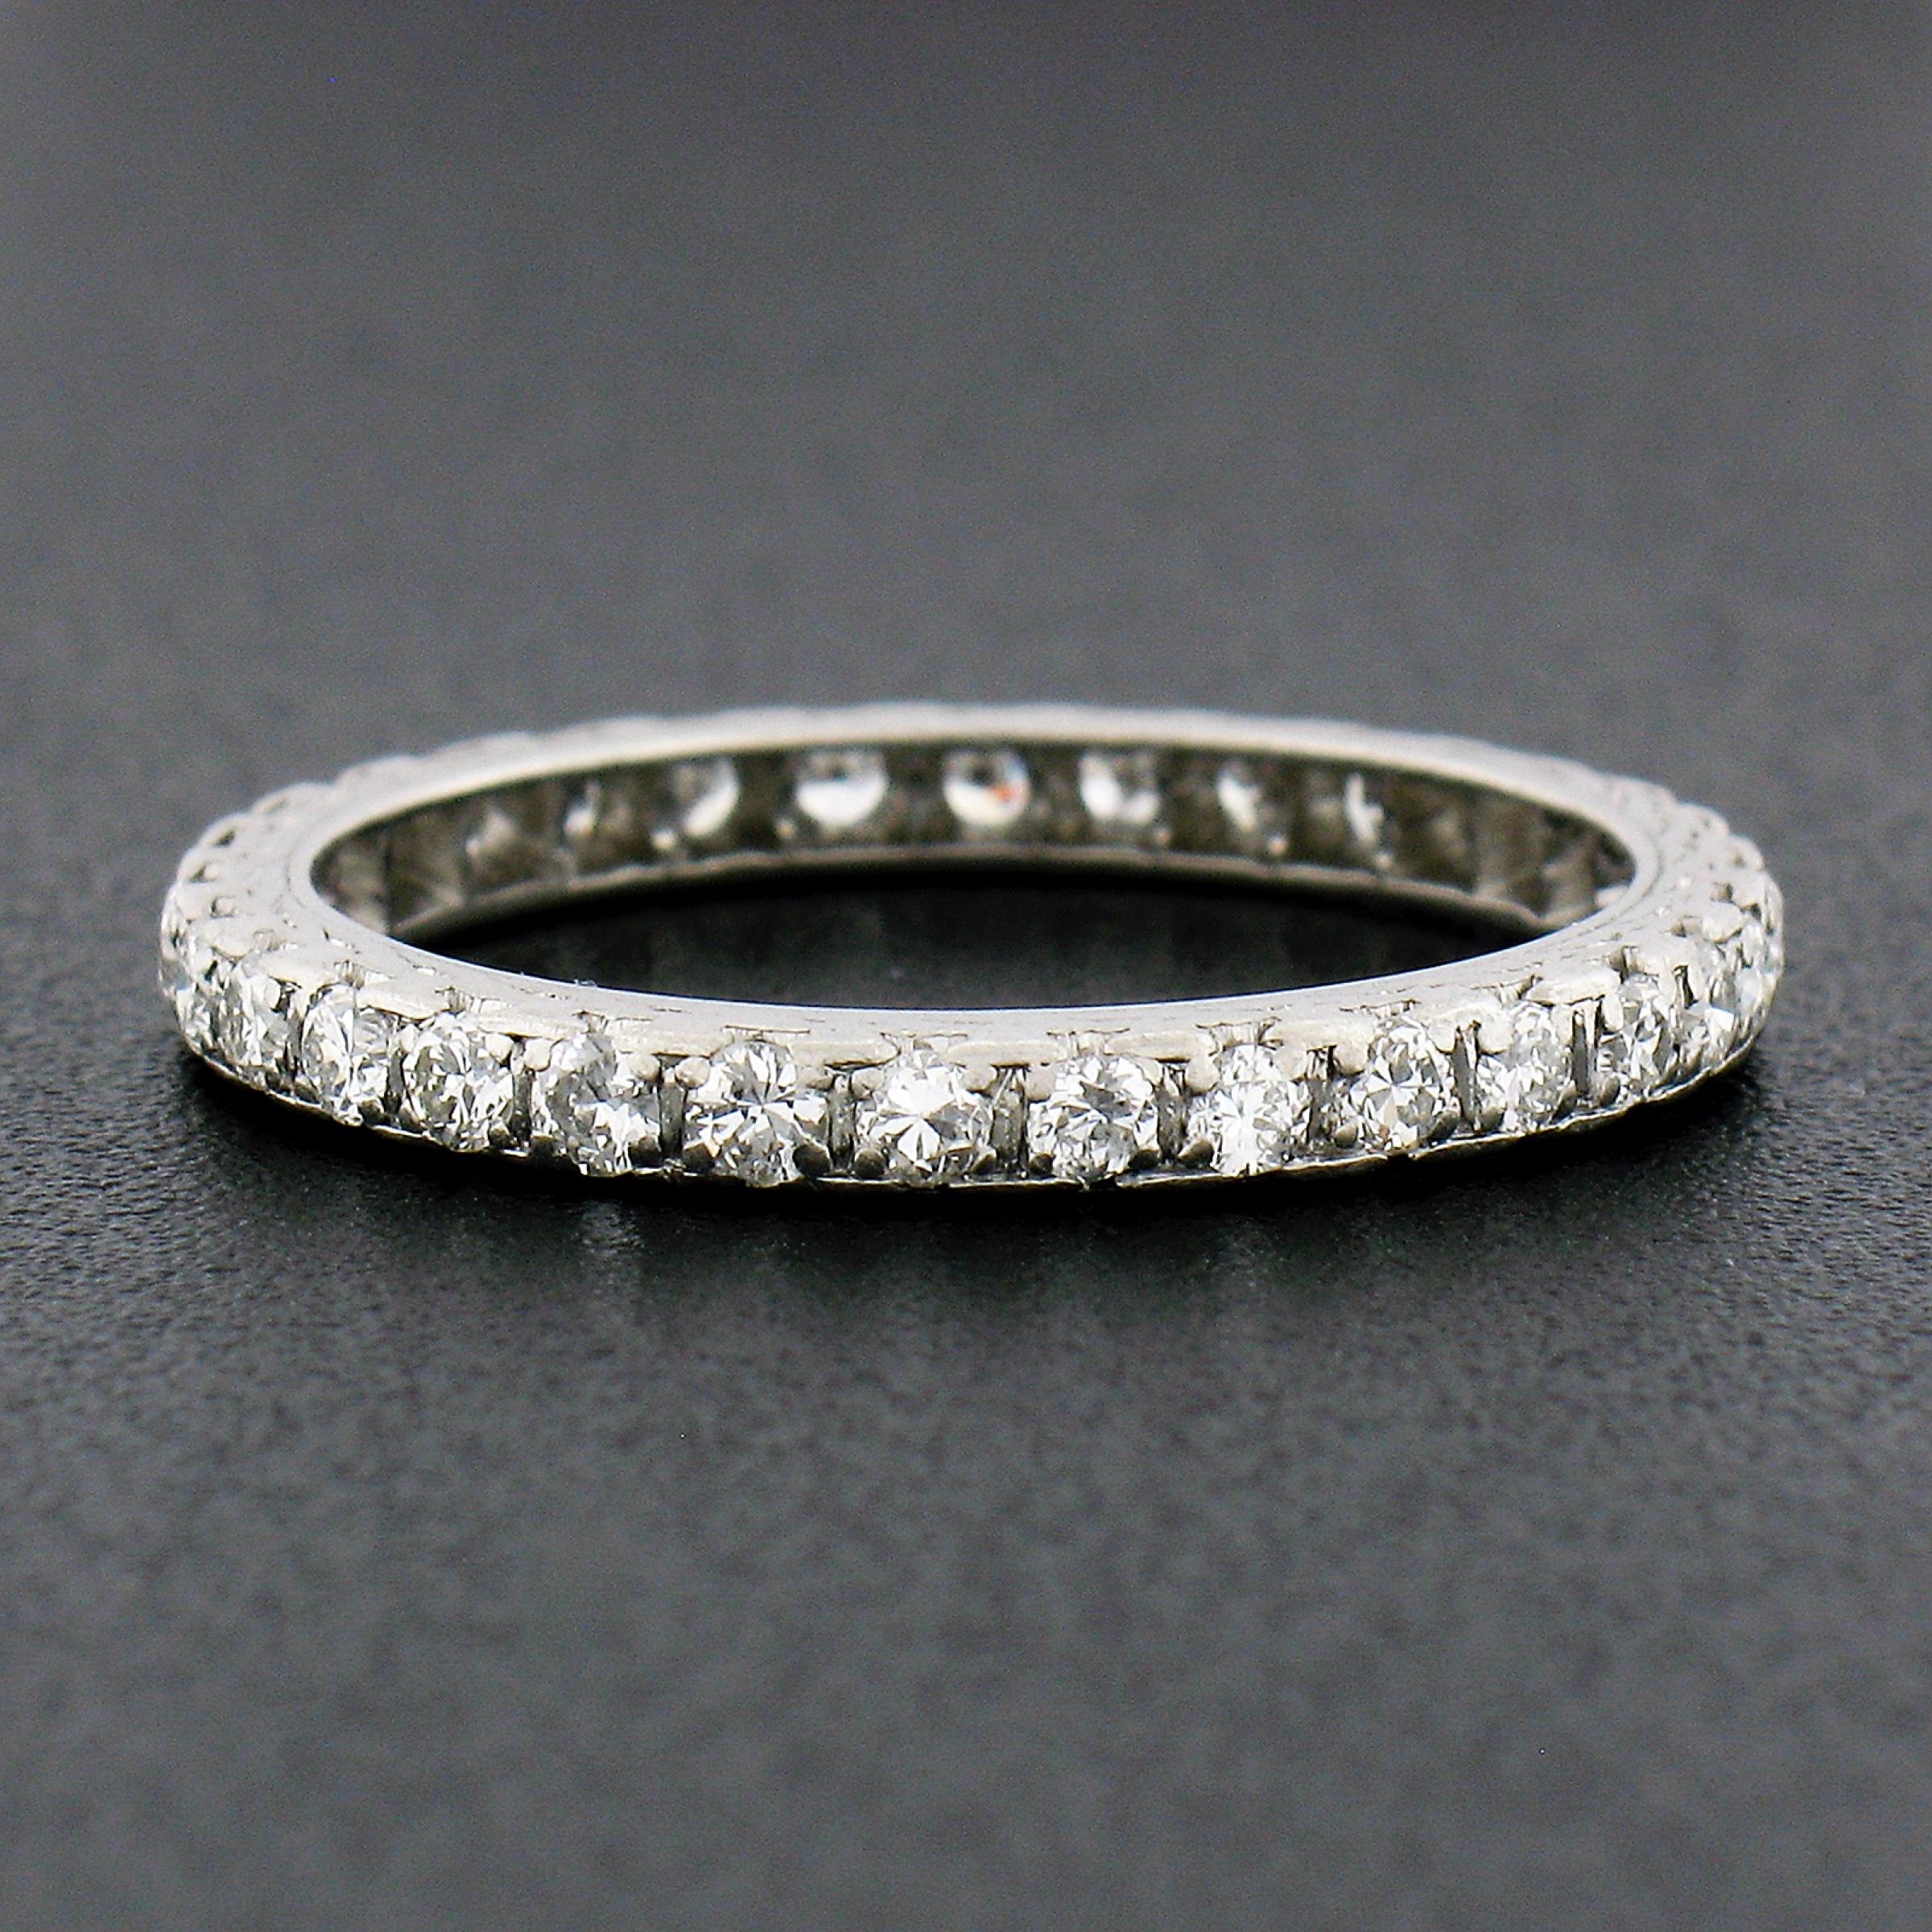 Antique Art Deco Platinum 0.78ct Pave Old Cut Diamond Eternity Wedding Band Ring For Sale 1